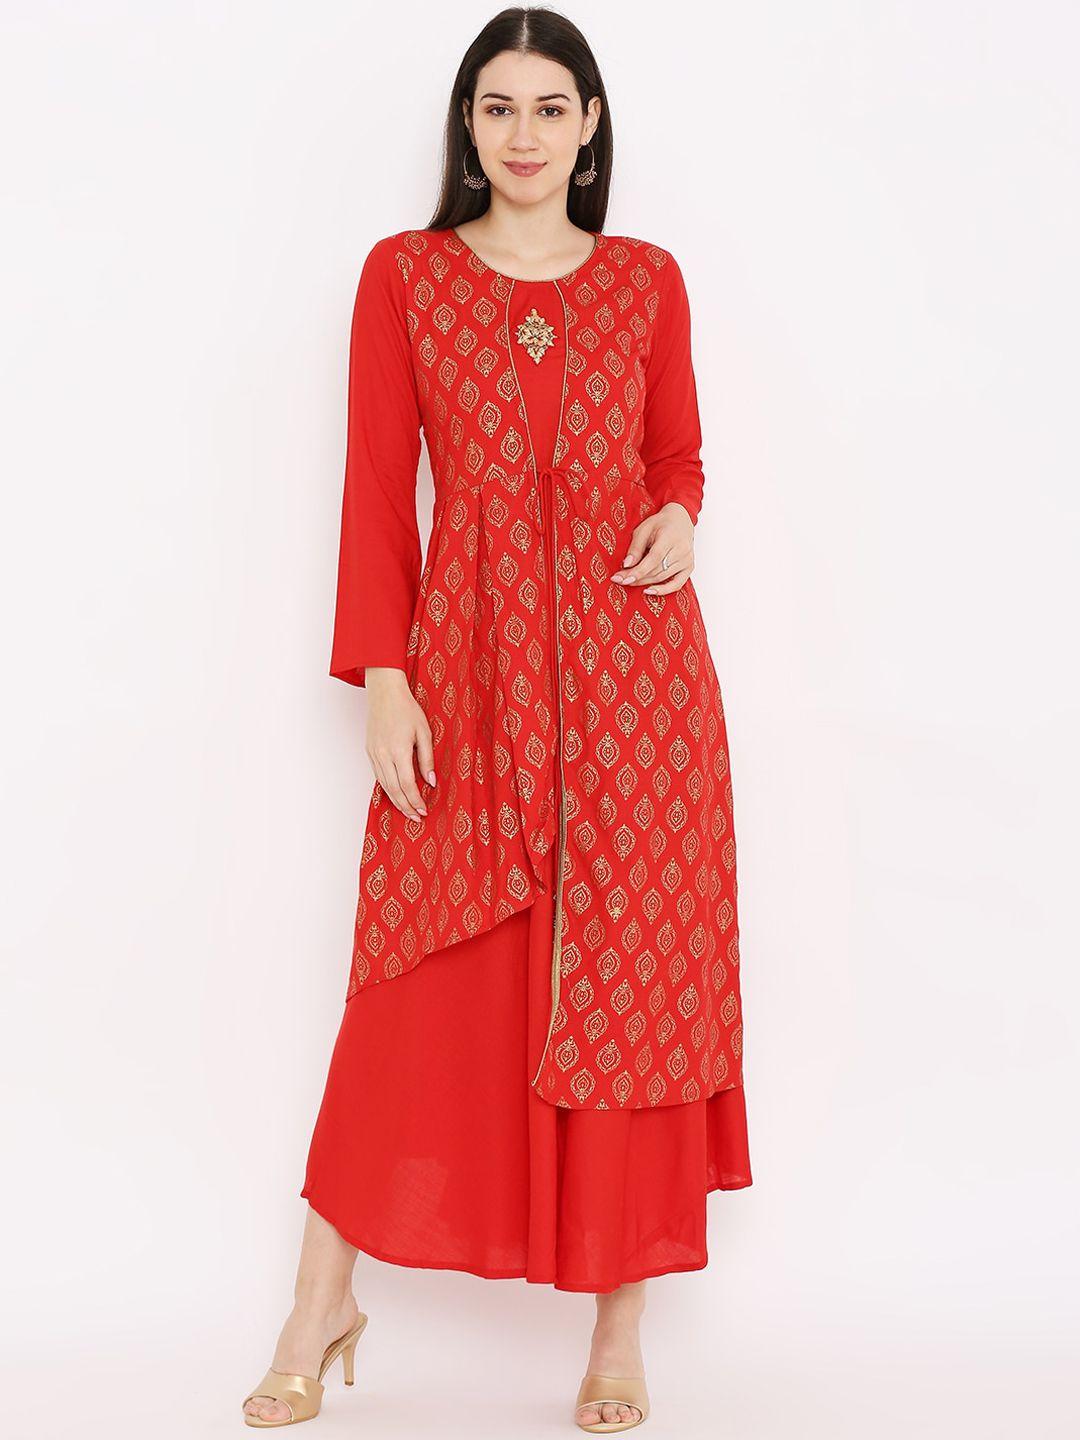 peppertree-red-&-golden-ethnic-motifs-layered-ethnic-midi-dress